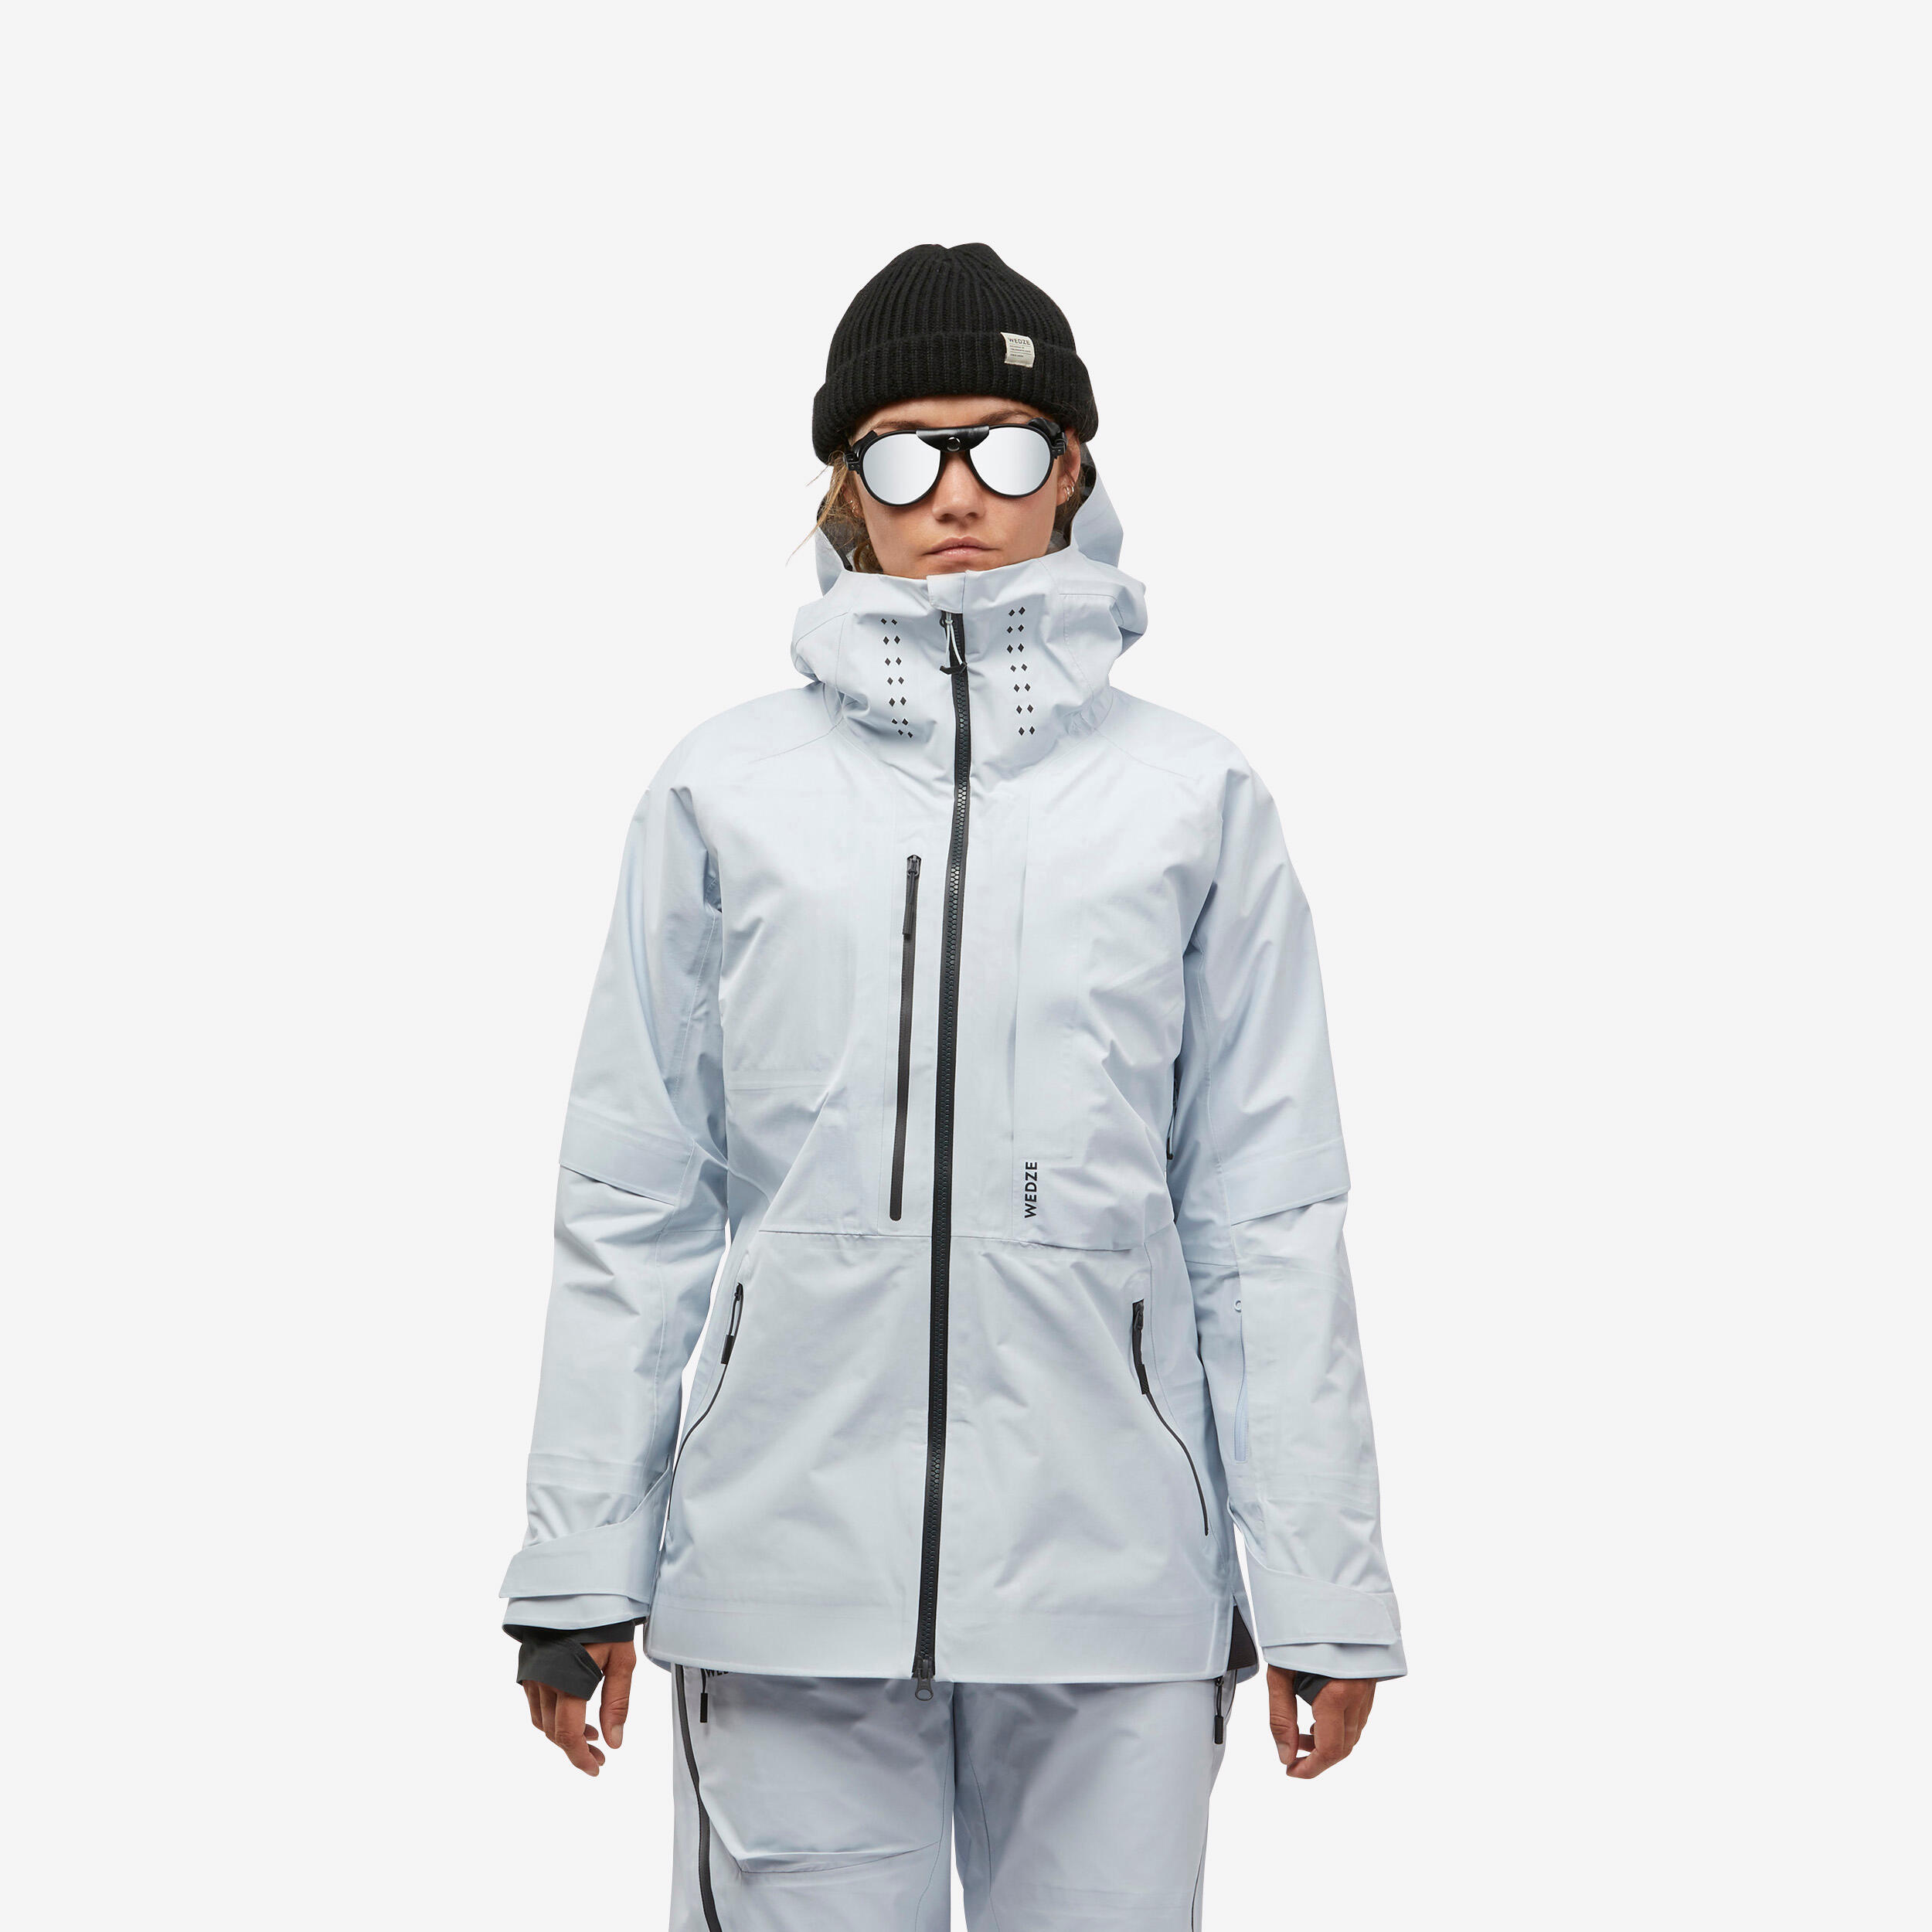 WEDZE Women’s Ski Jacket FR 900 - Light Blue